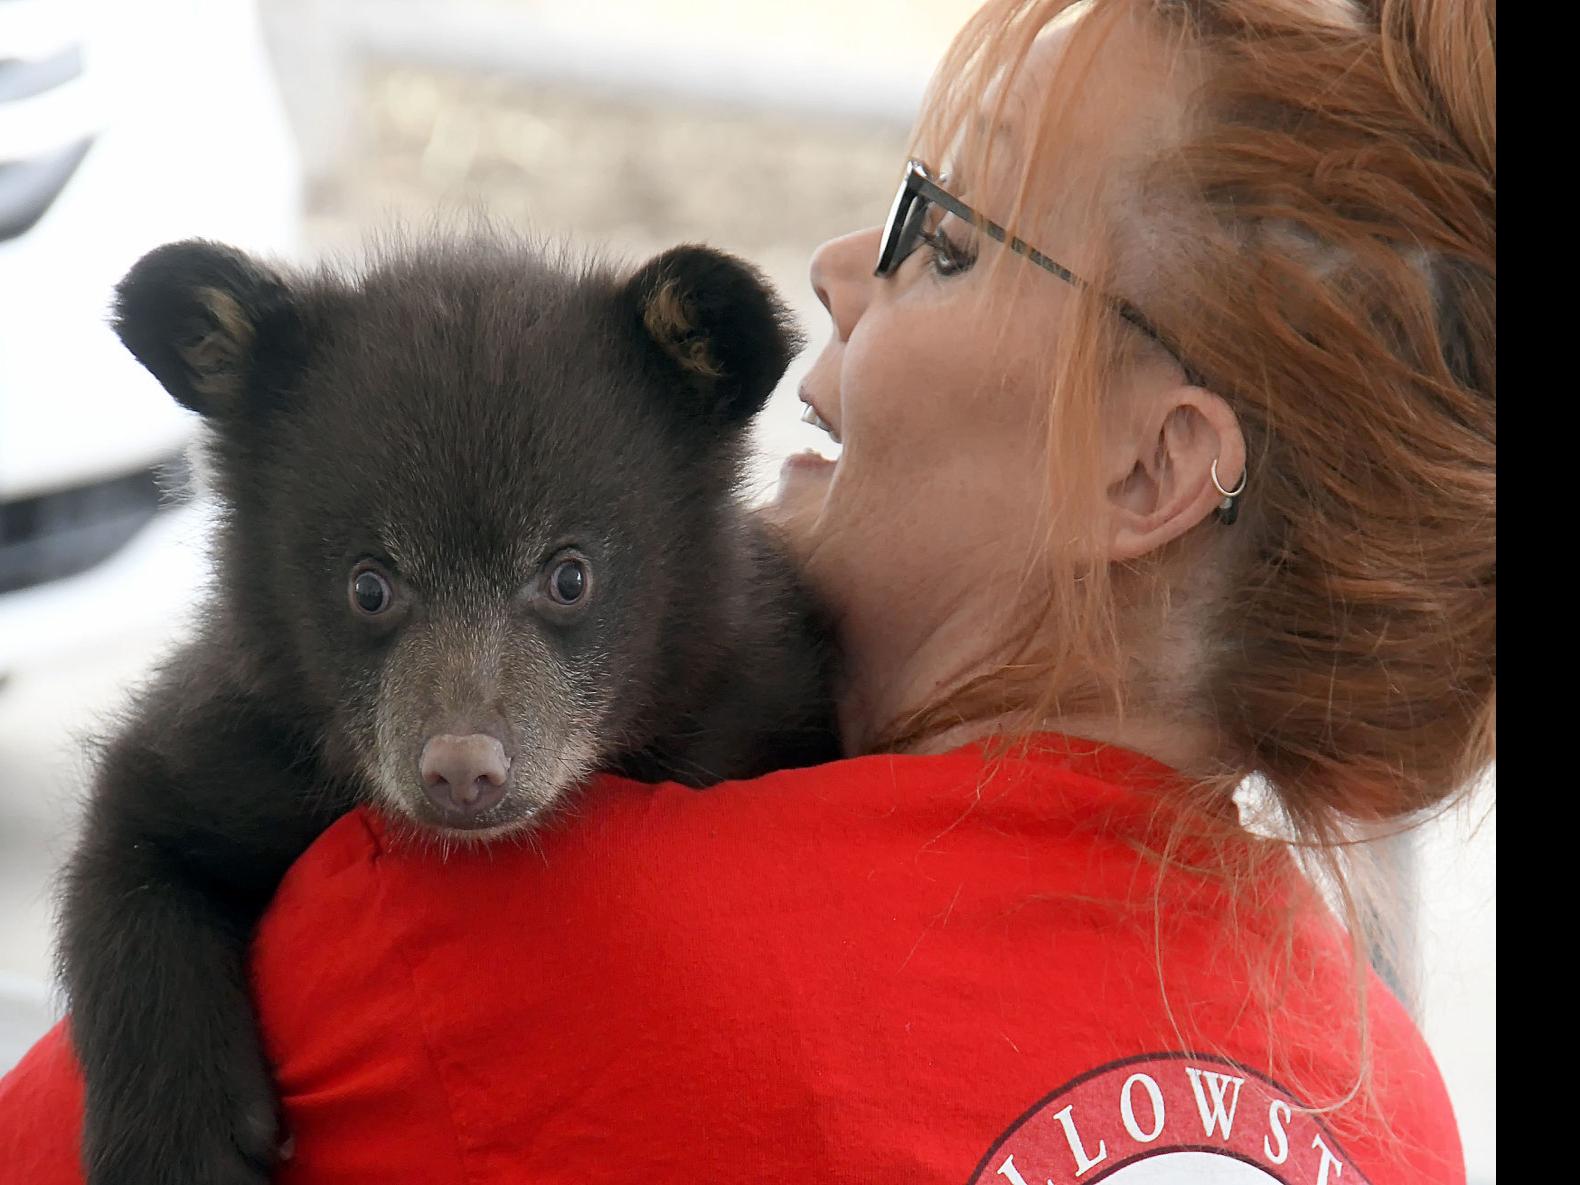 Baby Animal Days Bear Cub Exhibit Protested By Peta Free September E Edition Idahostatejournal Com